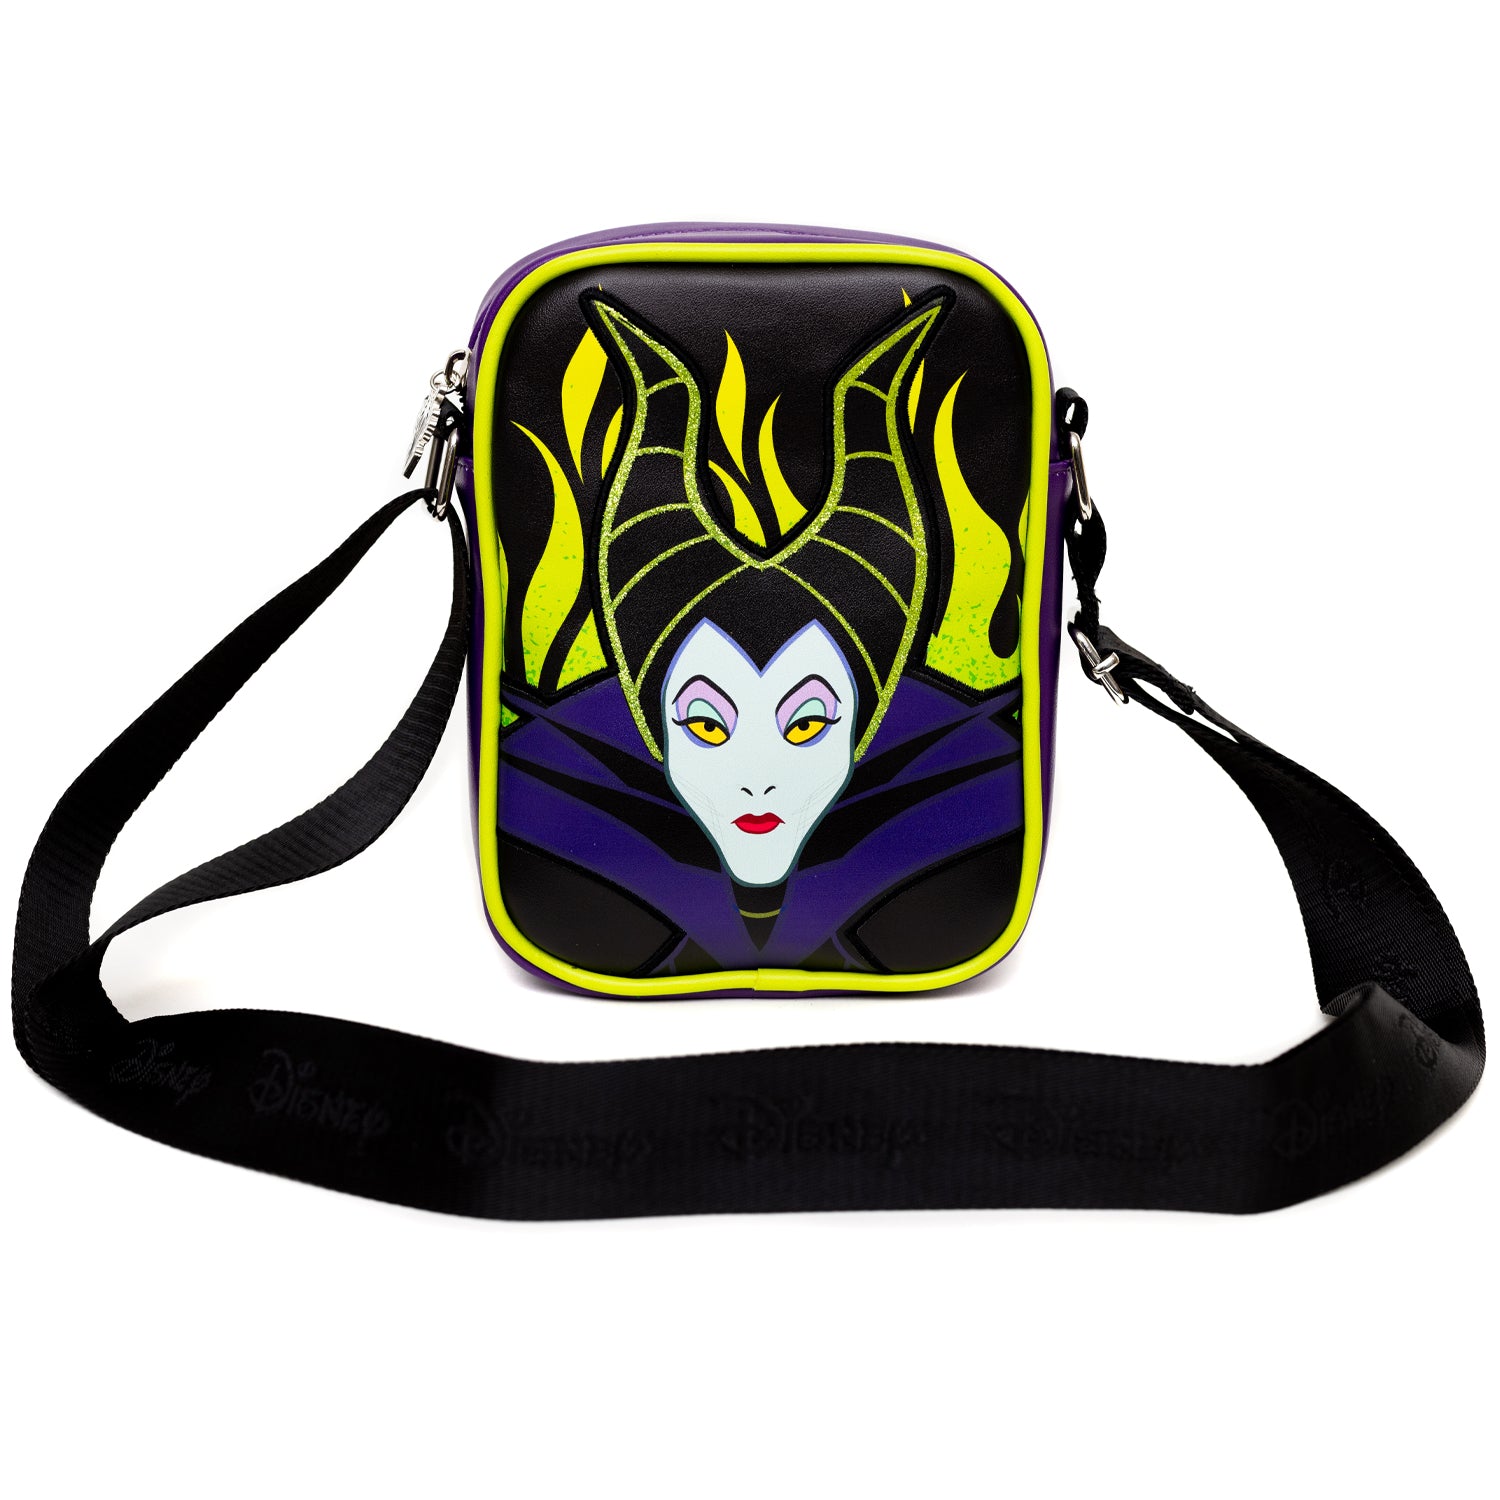 Disney Maleficent Backpack, Disney Leather Backpacks